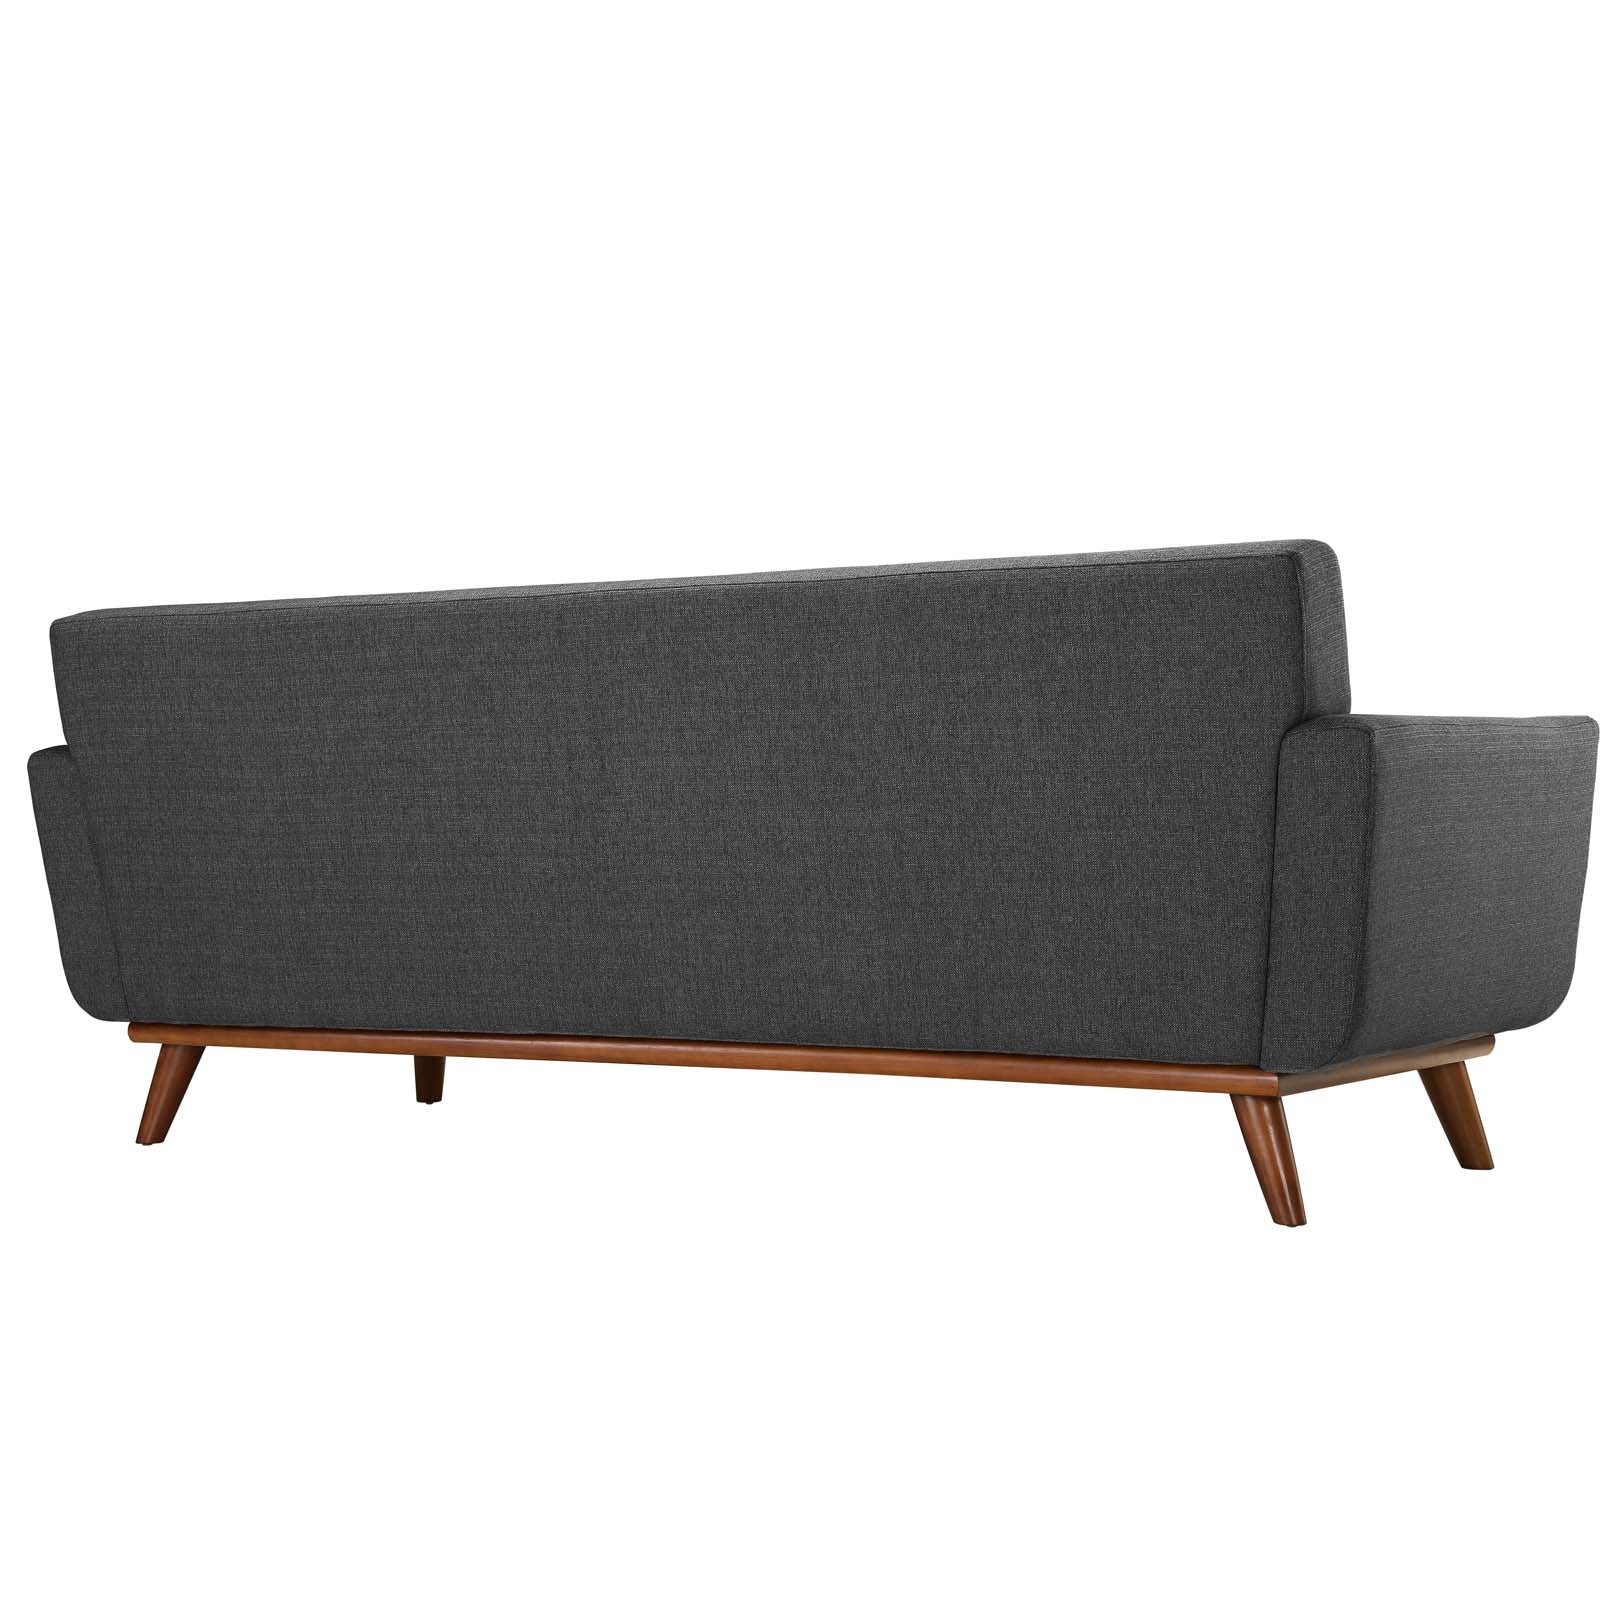 Engage Upholstered Fabric Sofa - East Shore Modern Home Furnishings